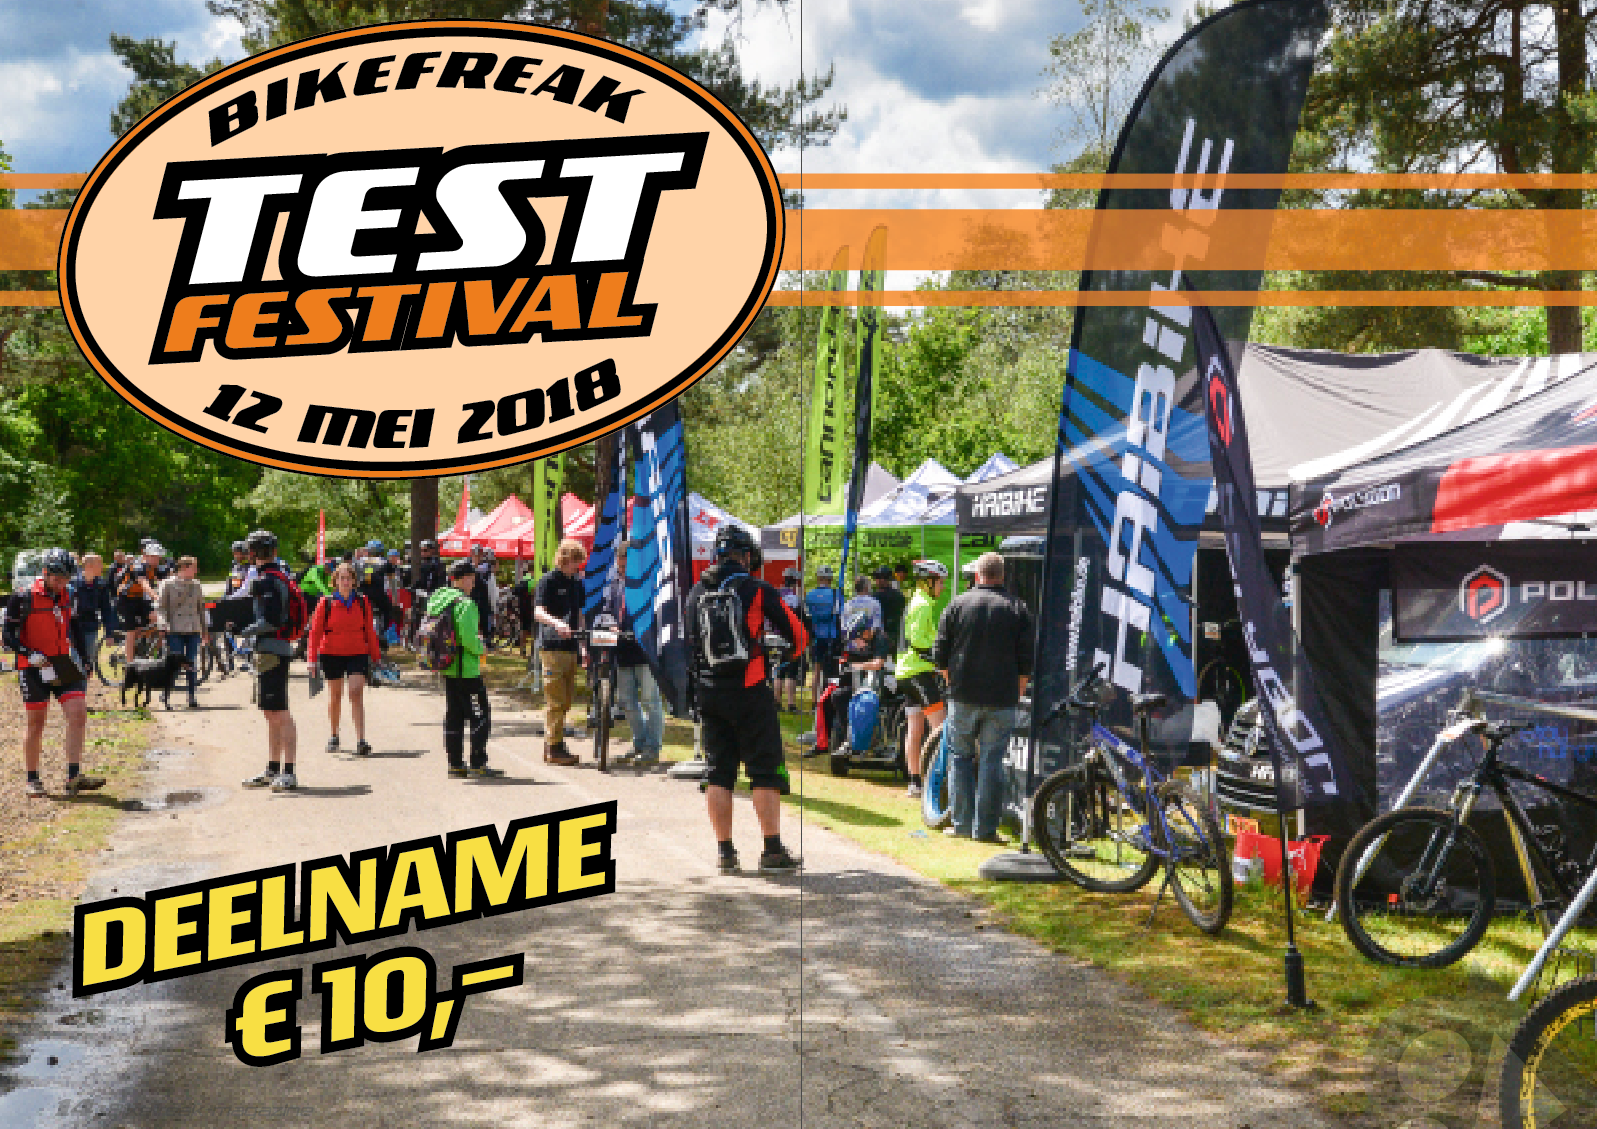 Bikefreak-test-festival-2018